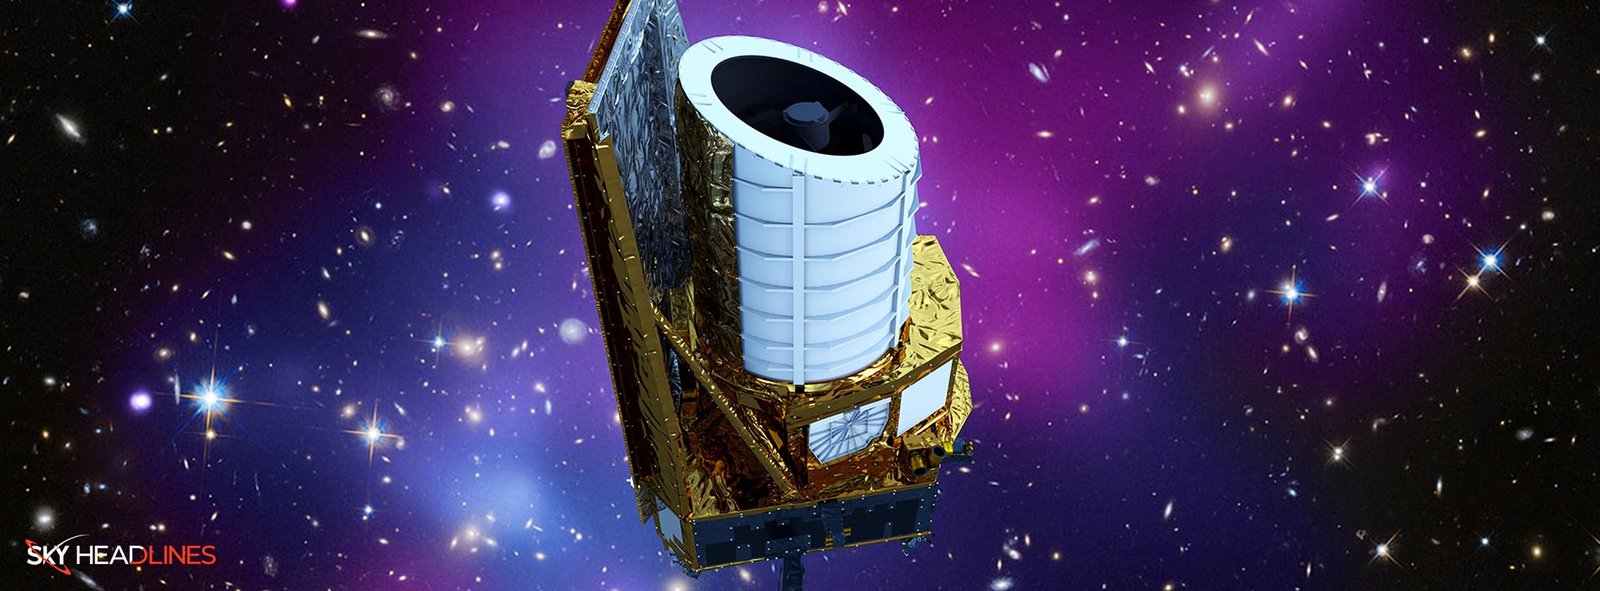 Euclid space telescope